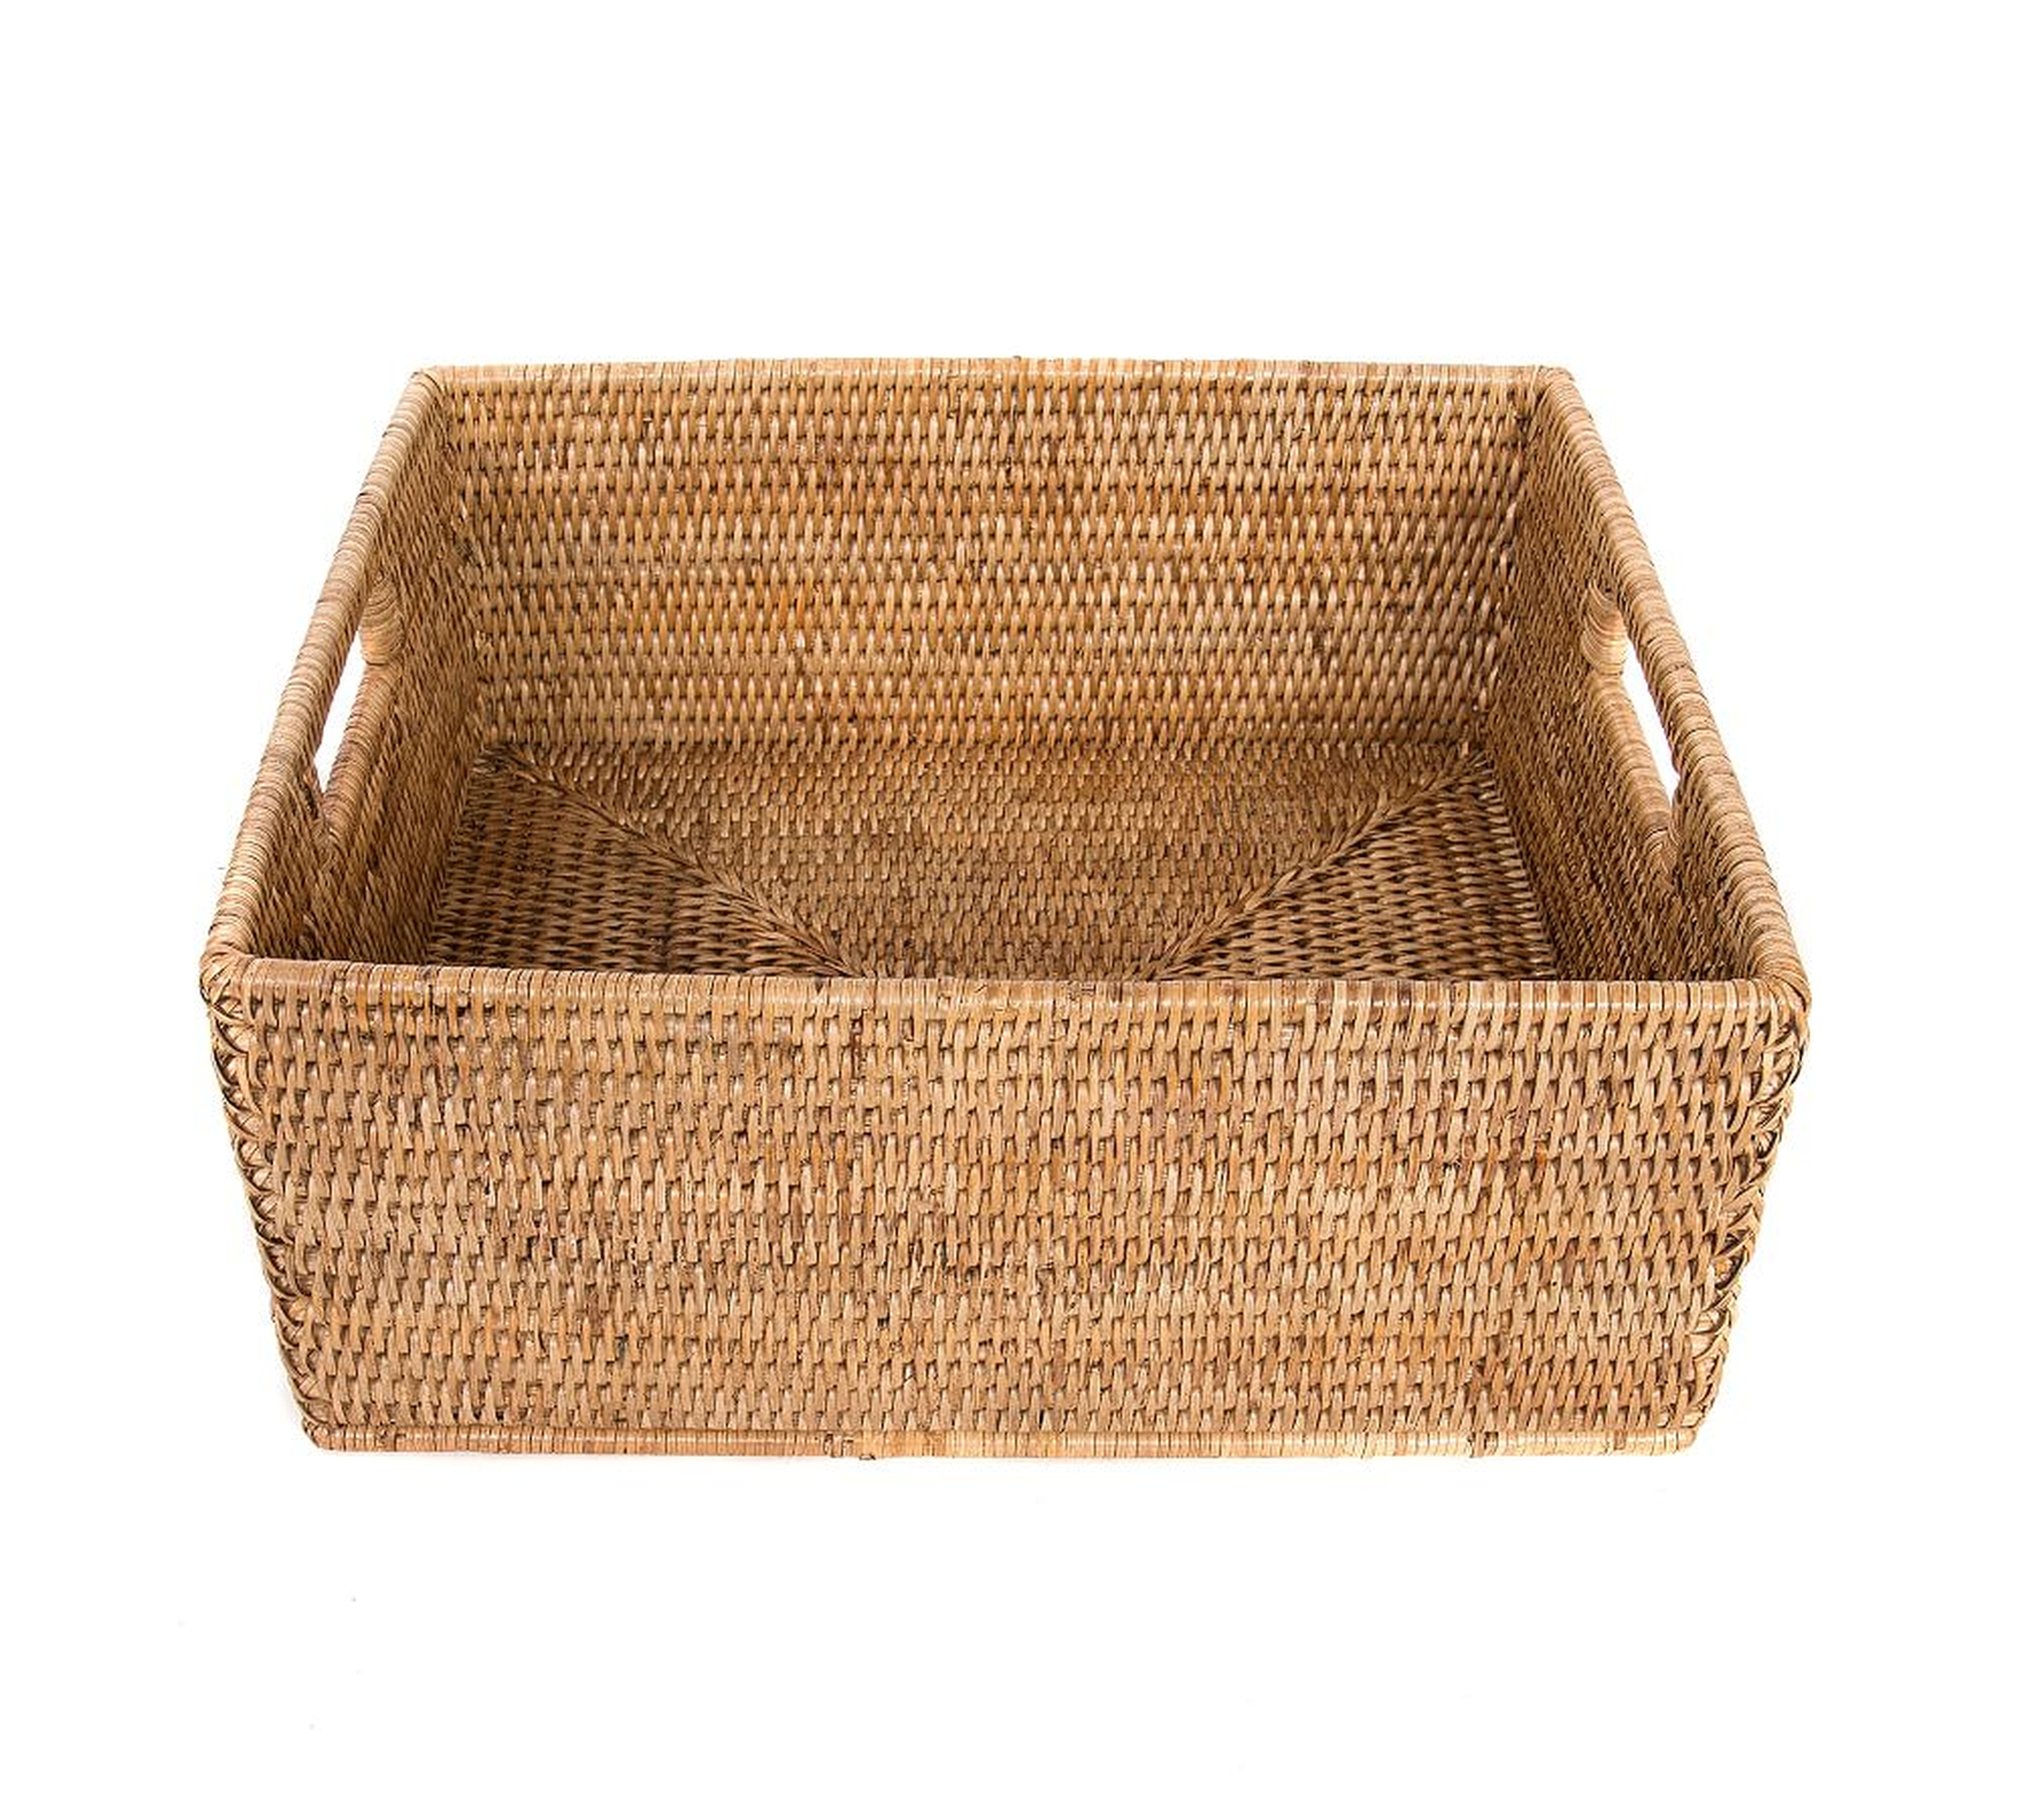 Tava Handwoven Rattan Rectangular Storage Basket, Medium, Natural - Pottery Barn